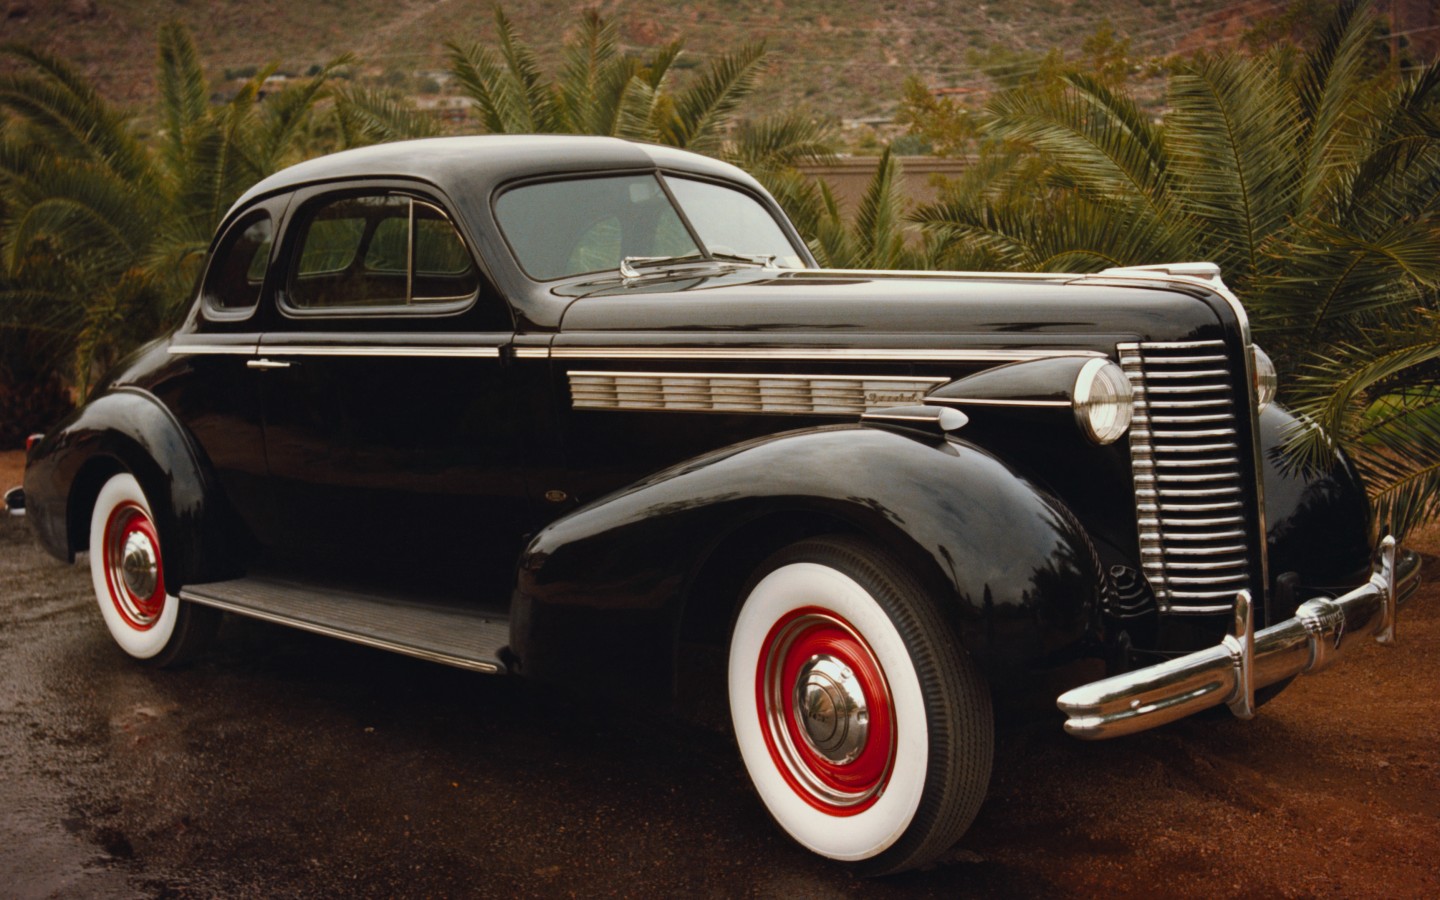 vintage car wallpaper,land vehicle,vehicle,car,classic,classic car